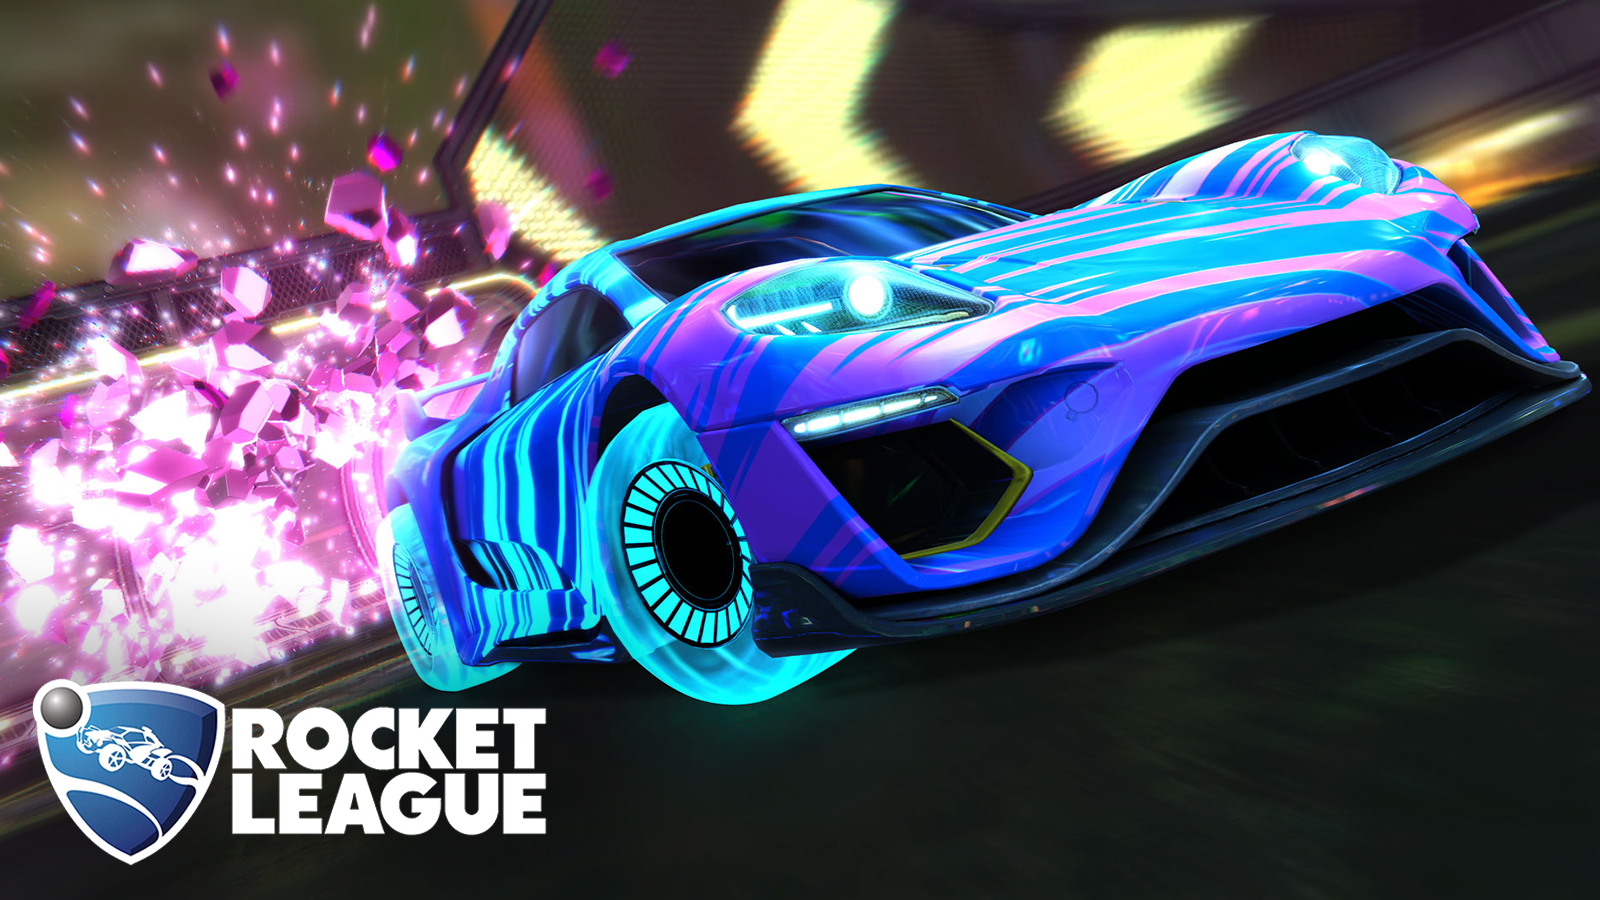 Rocket League Rocket Pass 6 released: rewards, cost, challenges, more